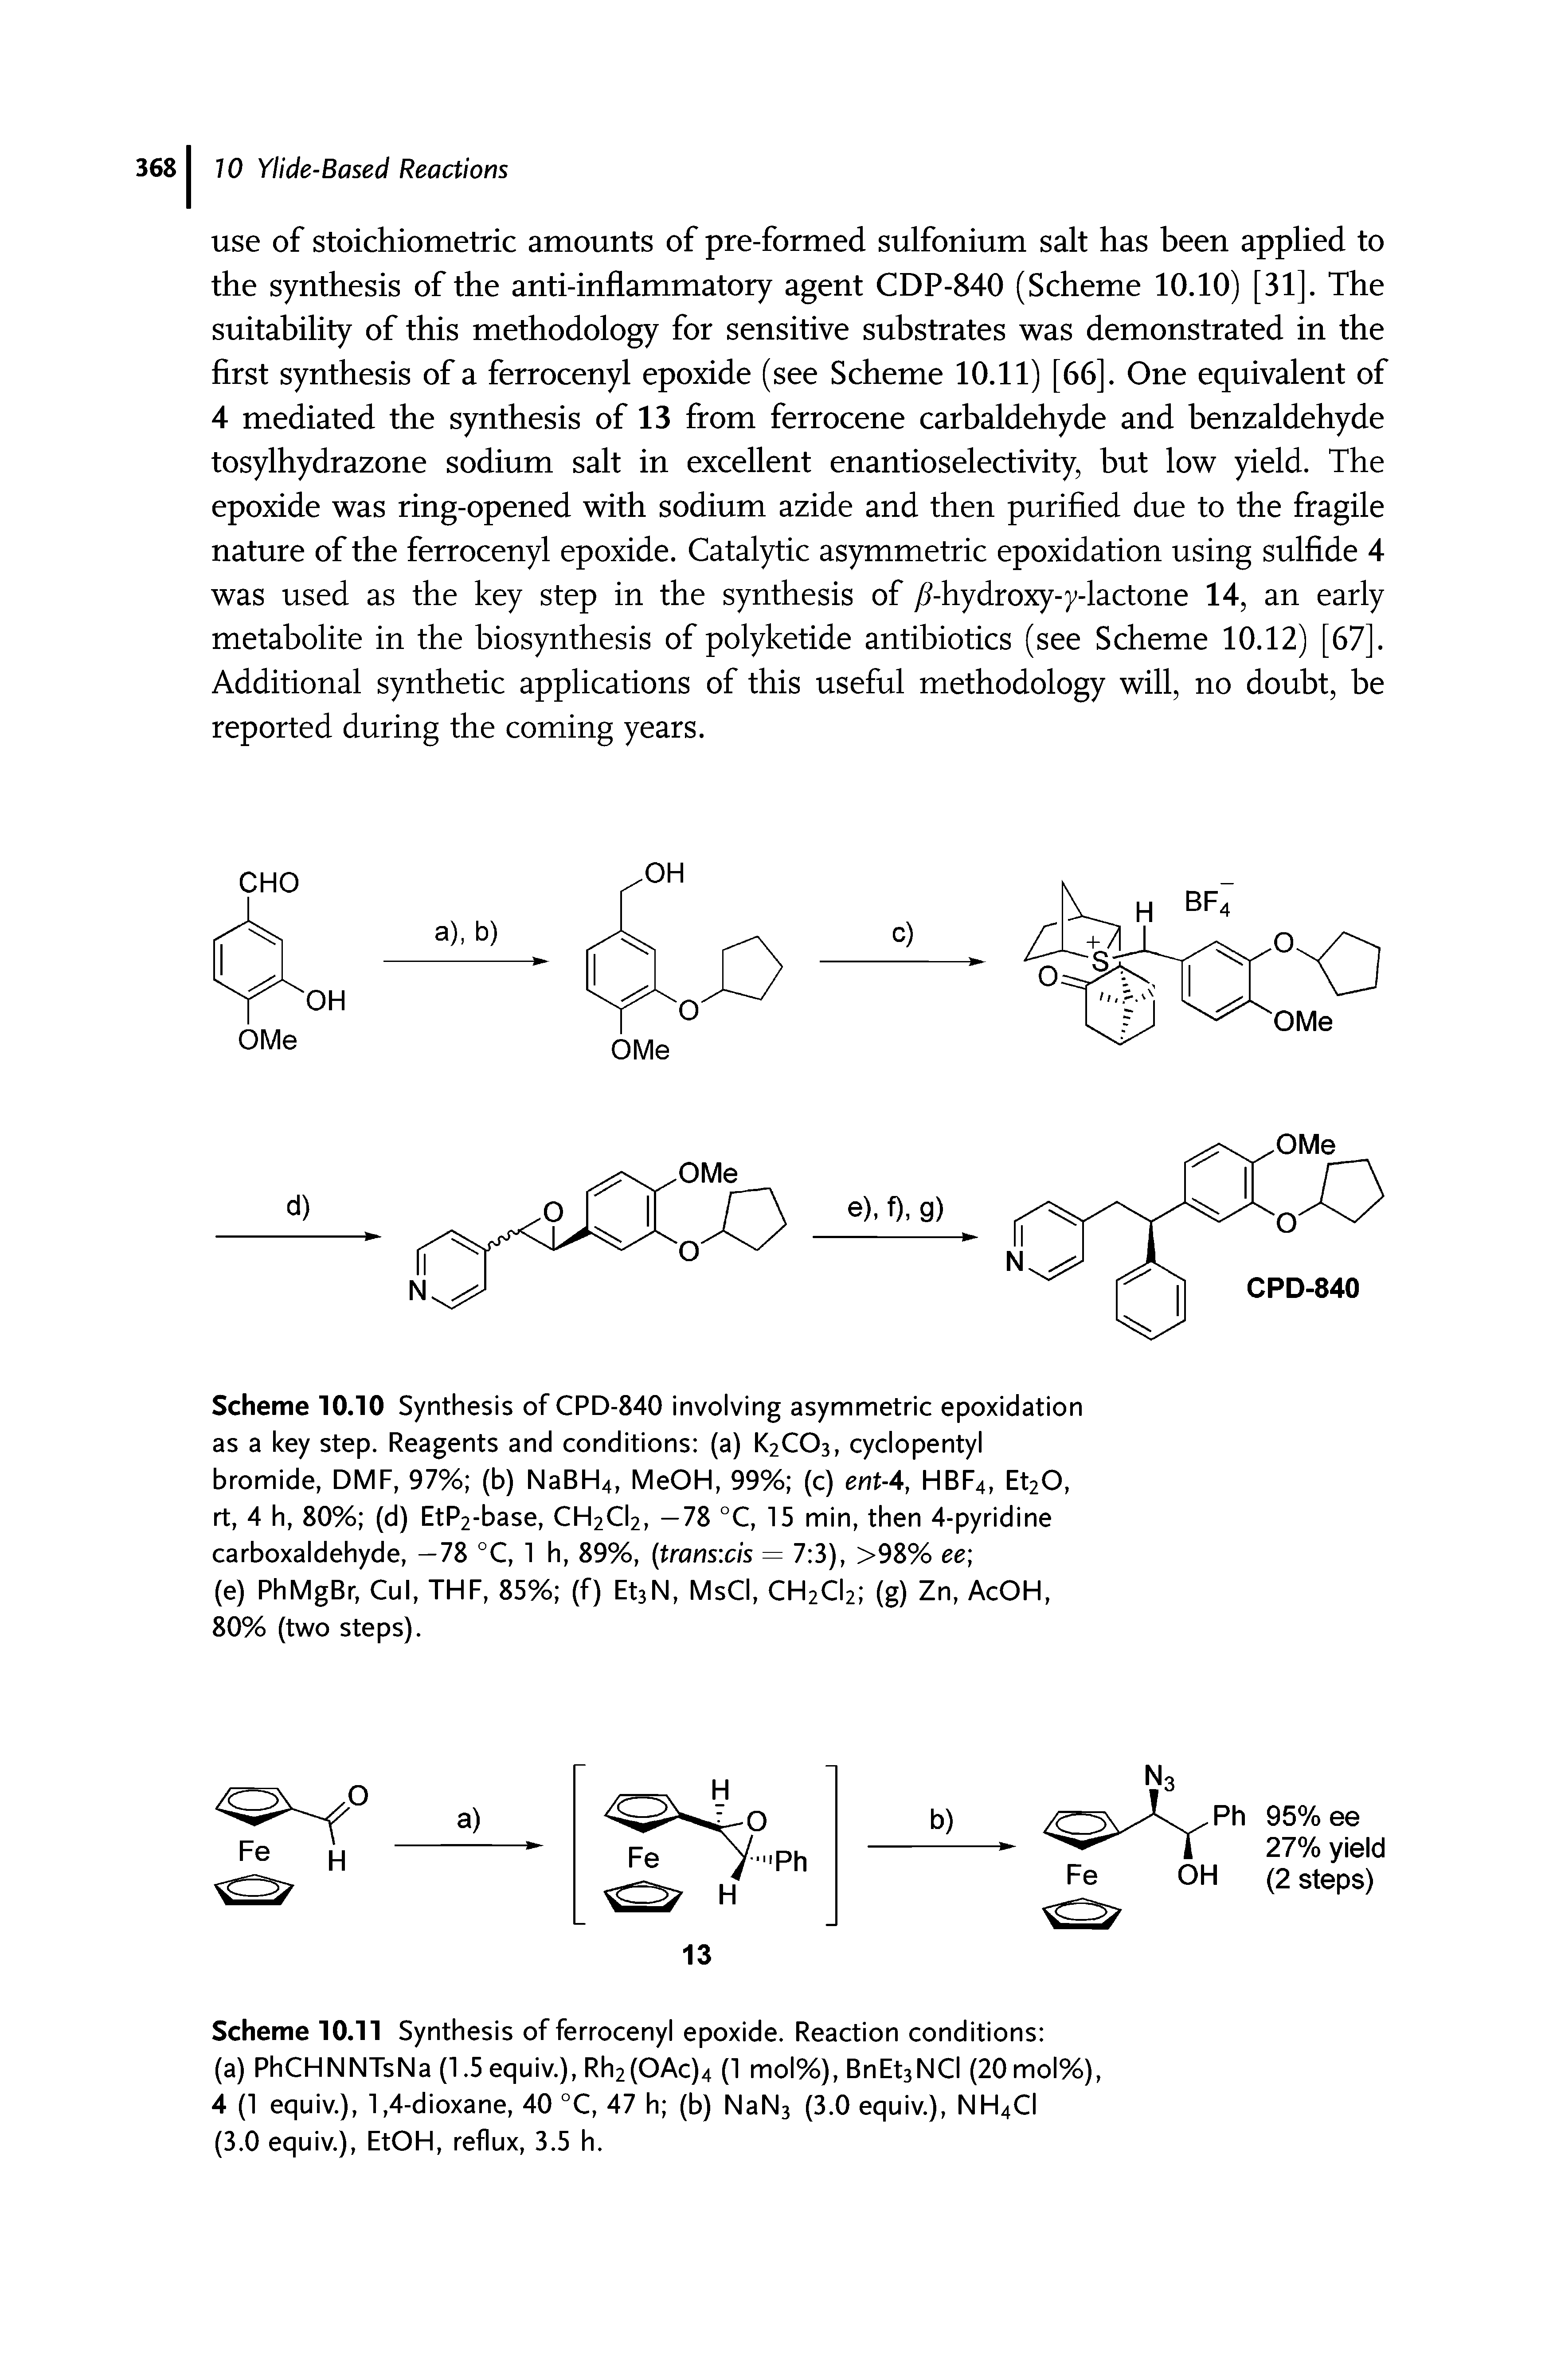 Scheme 10.10 Synthesis of CPD-840 involving asymmetric epoxidation as a key step. Reagents and conditions (a) K2CO3, cyclopentyl bromide, DMF, 97% (b) NaBH4, MeOH, 99% (c) ent-4, HBF4, Et20, rt, 4 h, 80% (d) EtP2-base, CH2CI2, —78 °C, 15 min, then 4-pyridine carboxaldehyde, —78 °C, 1 h, 89%, (trans cis = 7 3), >98% ee ...